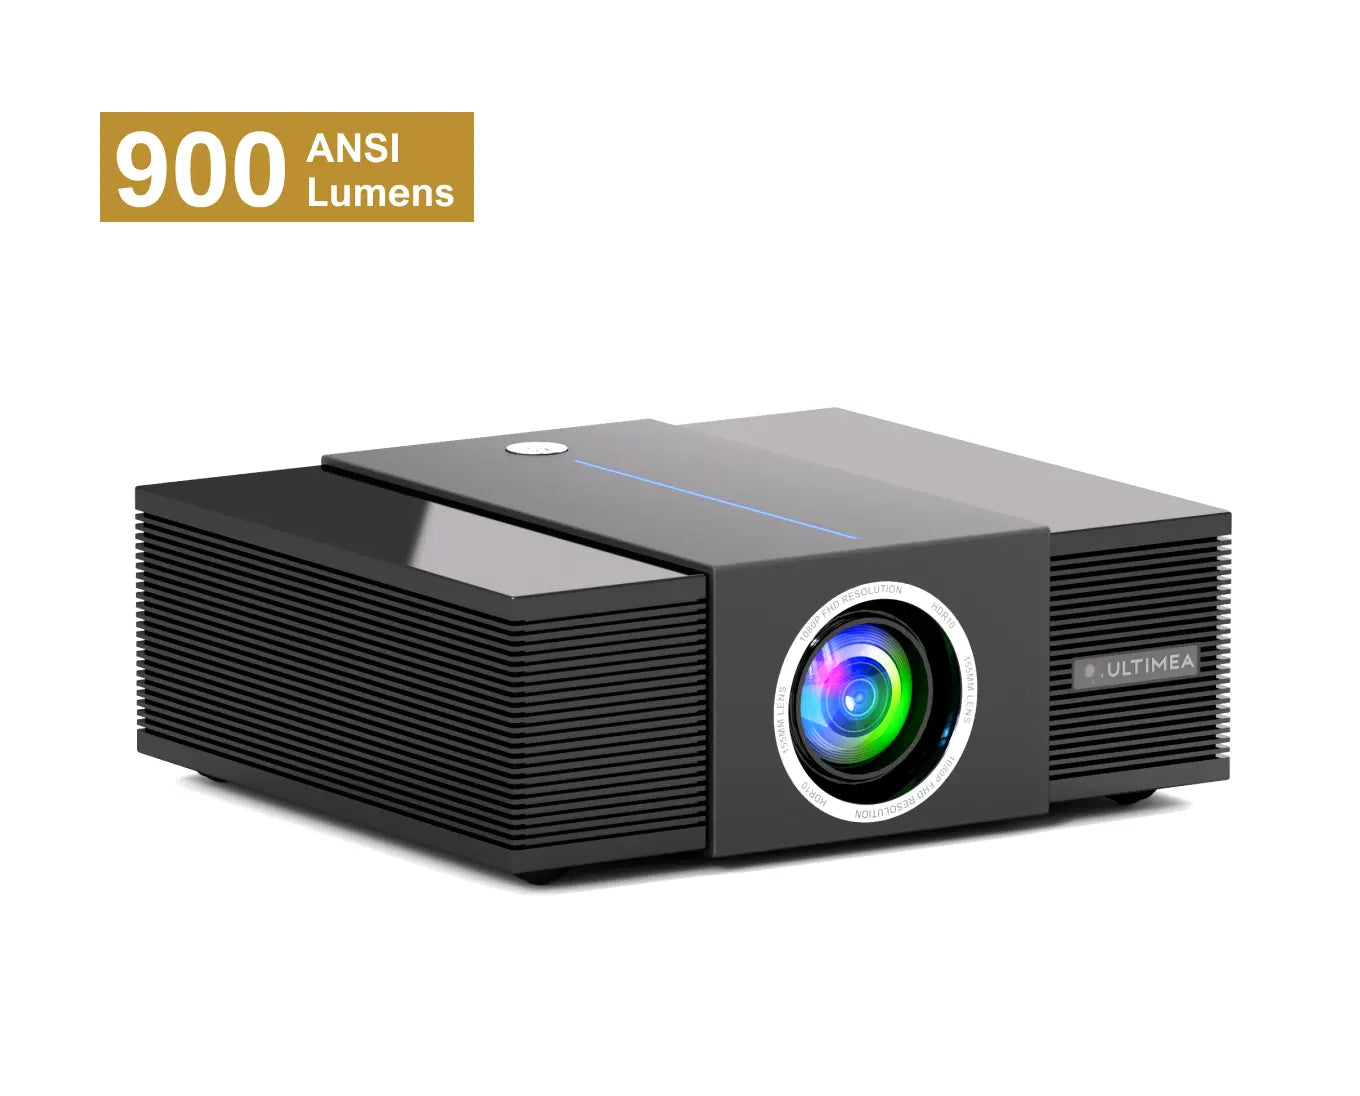 Best Smart 1080p Projector Under $250 in 2023 — Ultimea Apollo P40 Projector